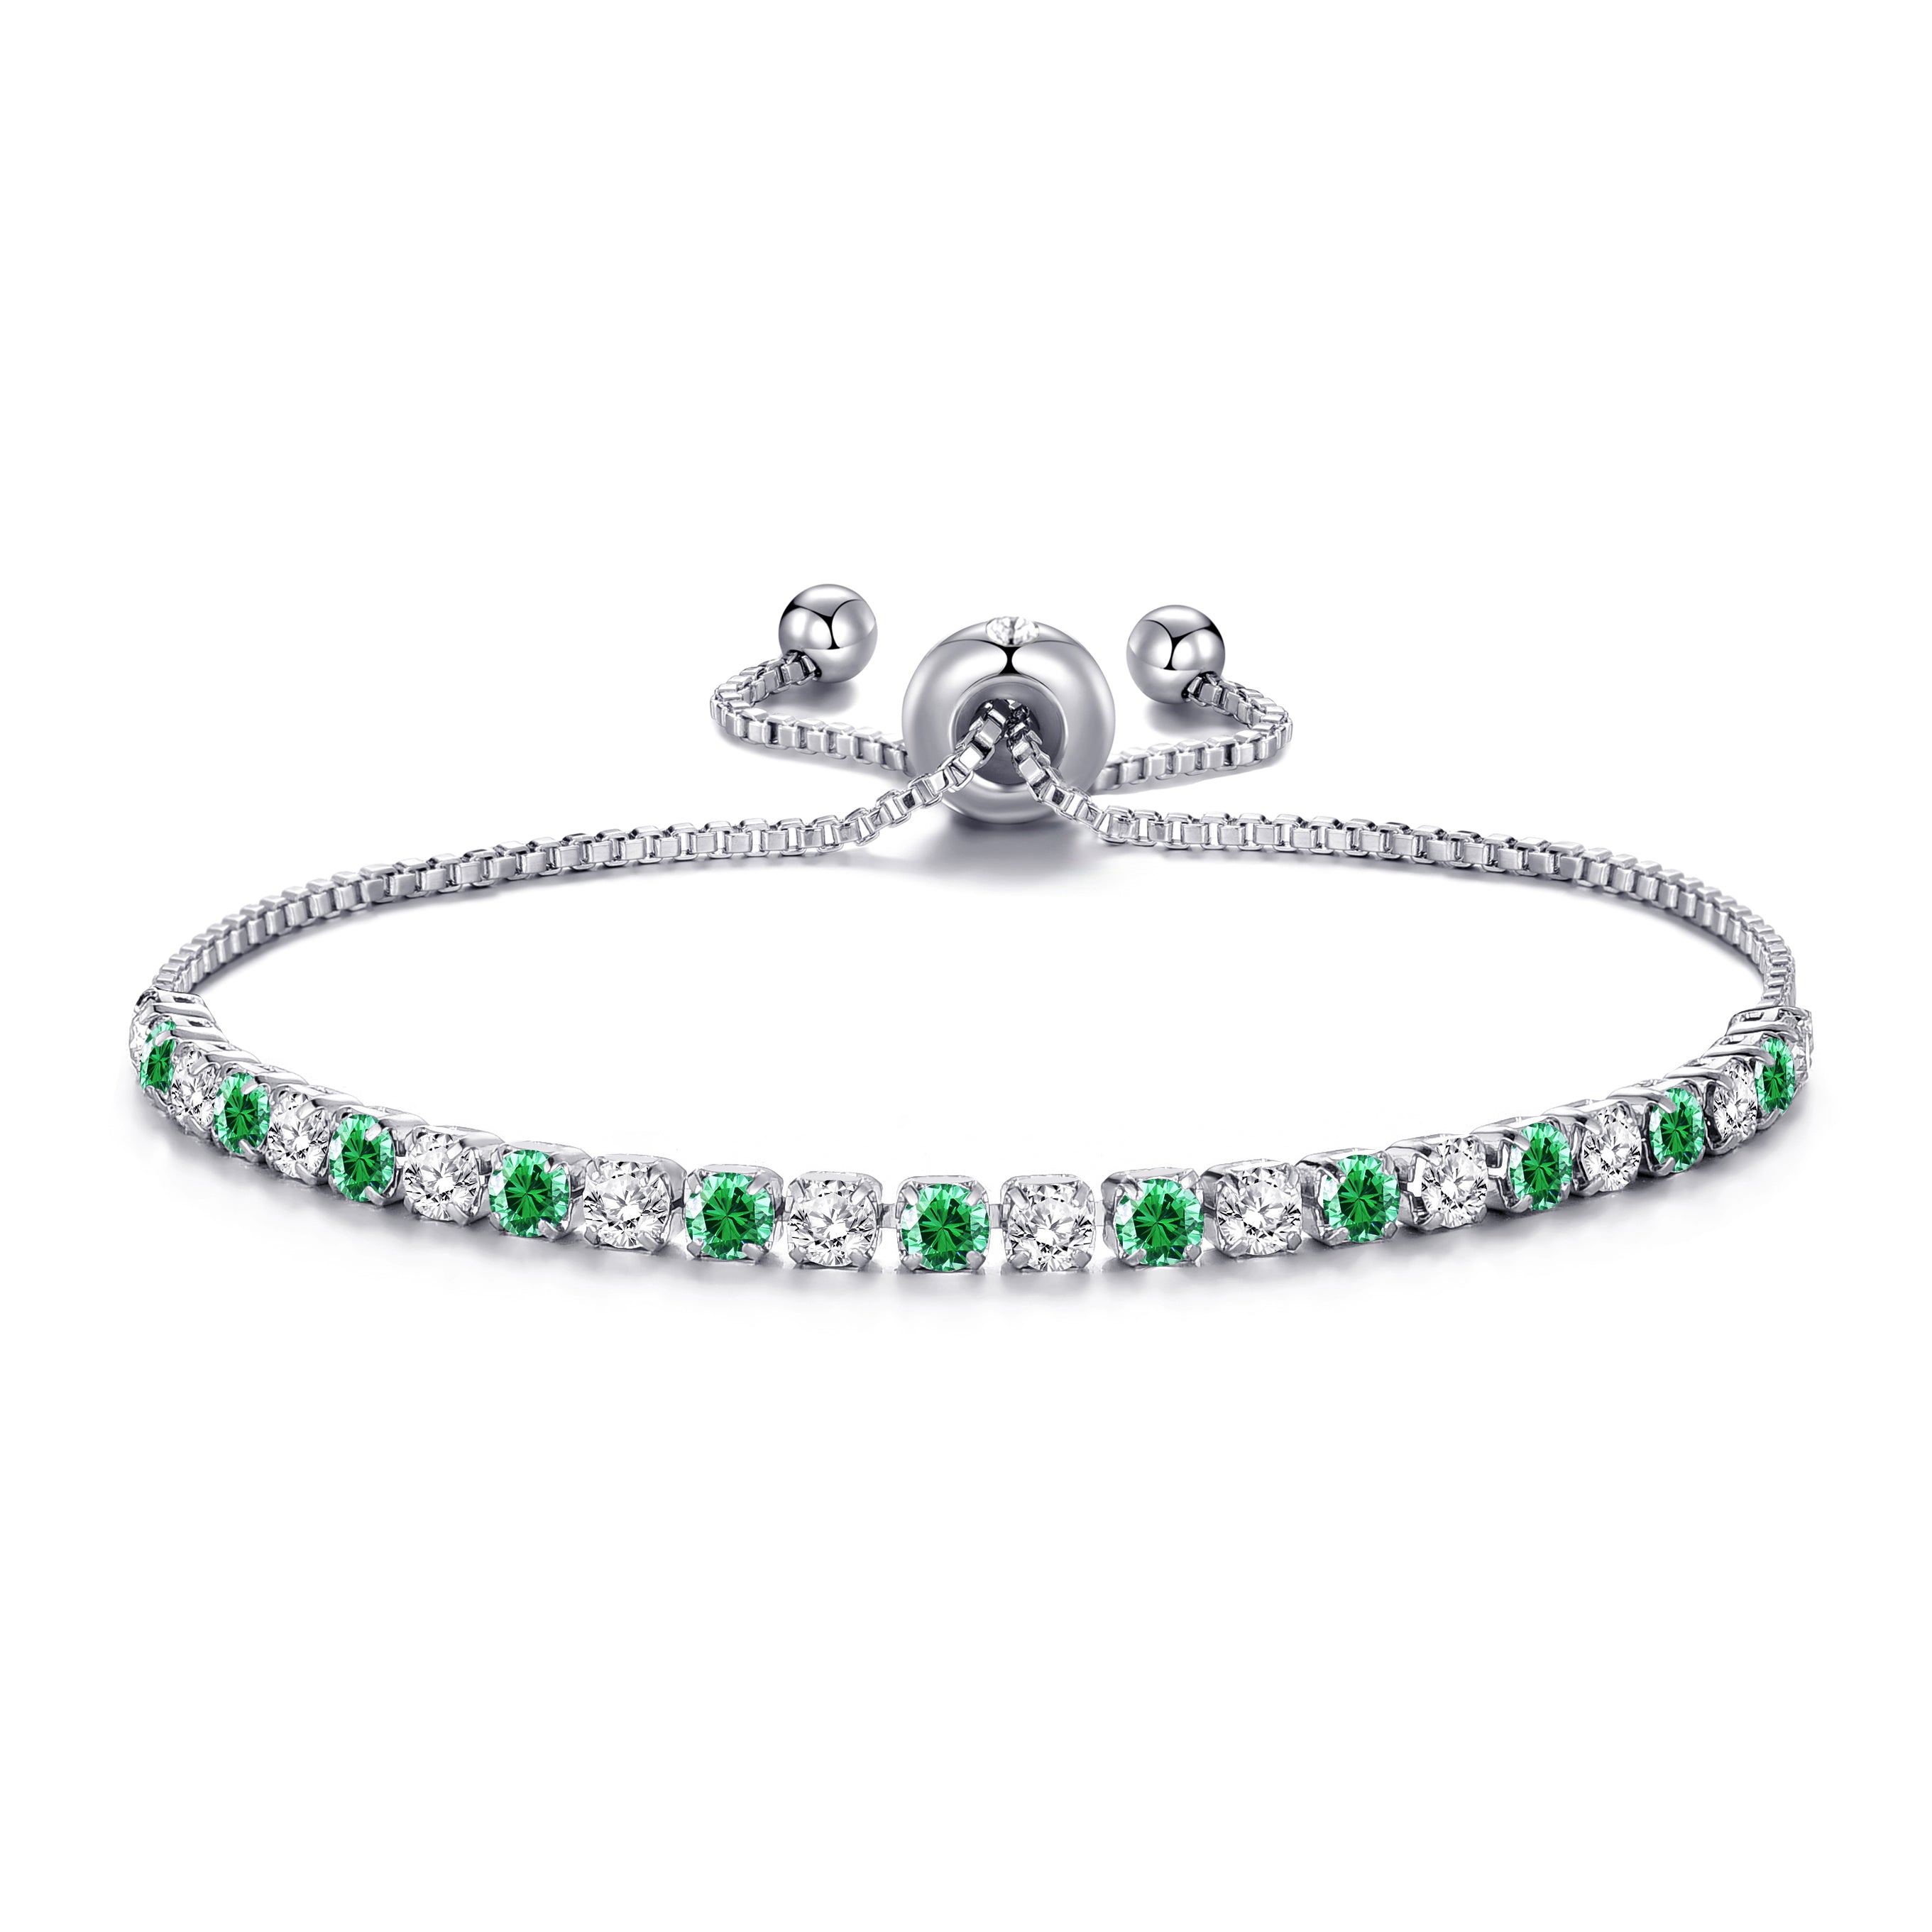 Silver Plated Adjustable Green Tennis Bracelet Created with Zircondia® Crystals by Philip Jones Jewellery